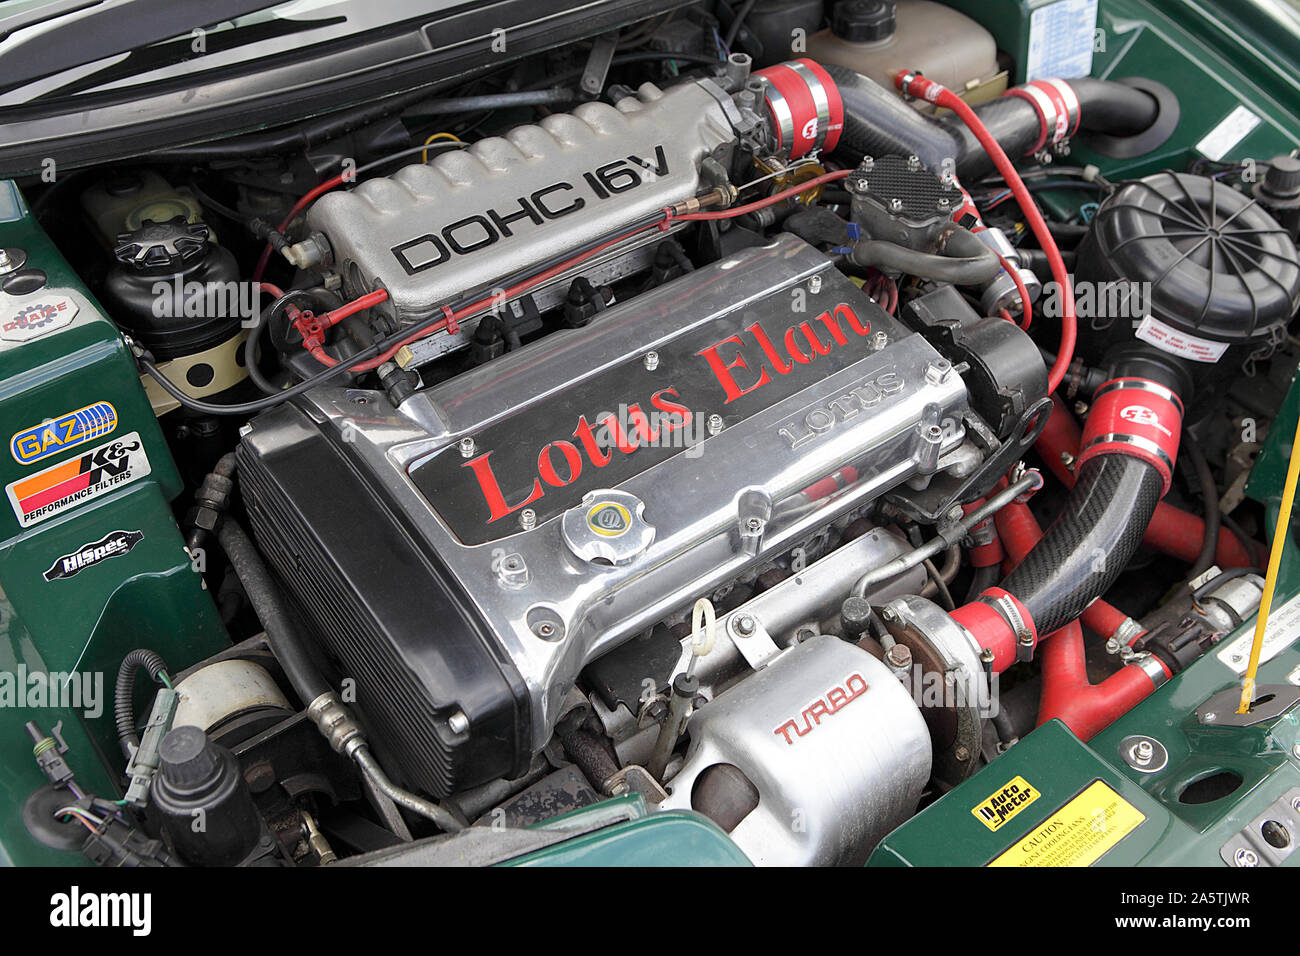 Lotus Elan Dohc 16 Valve Engine Hi Res Stock Photography And Images Alamy